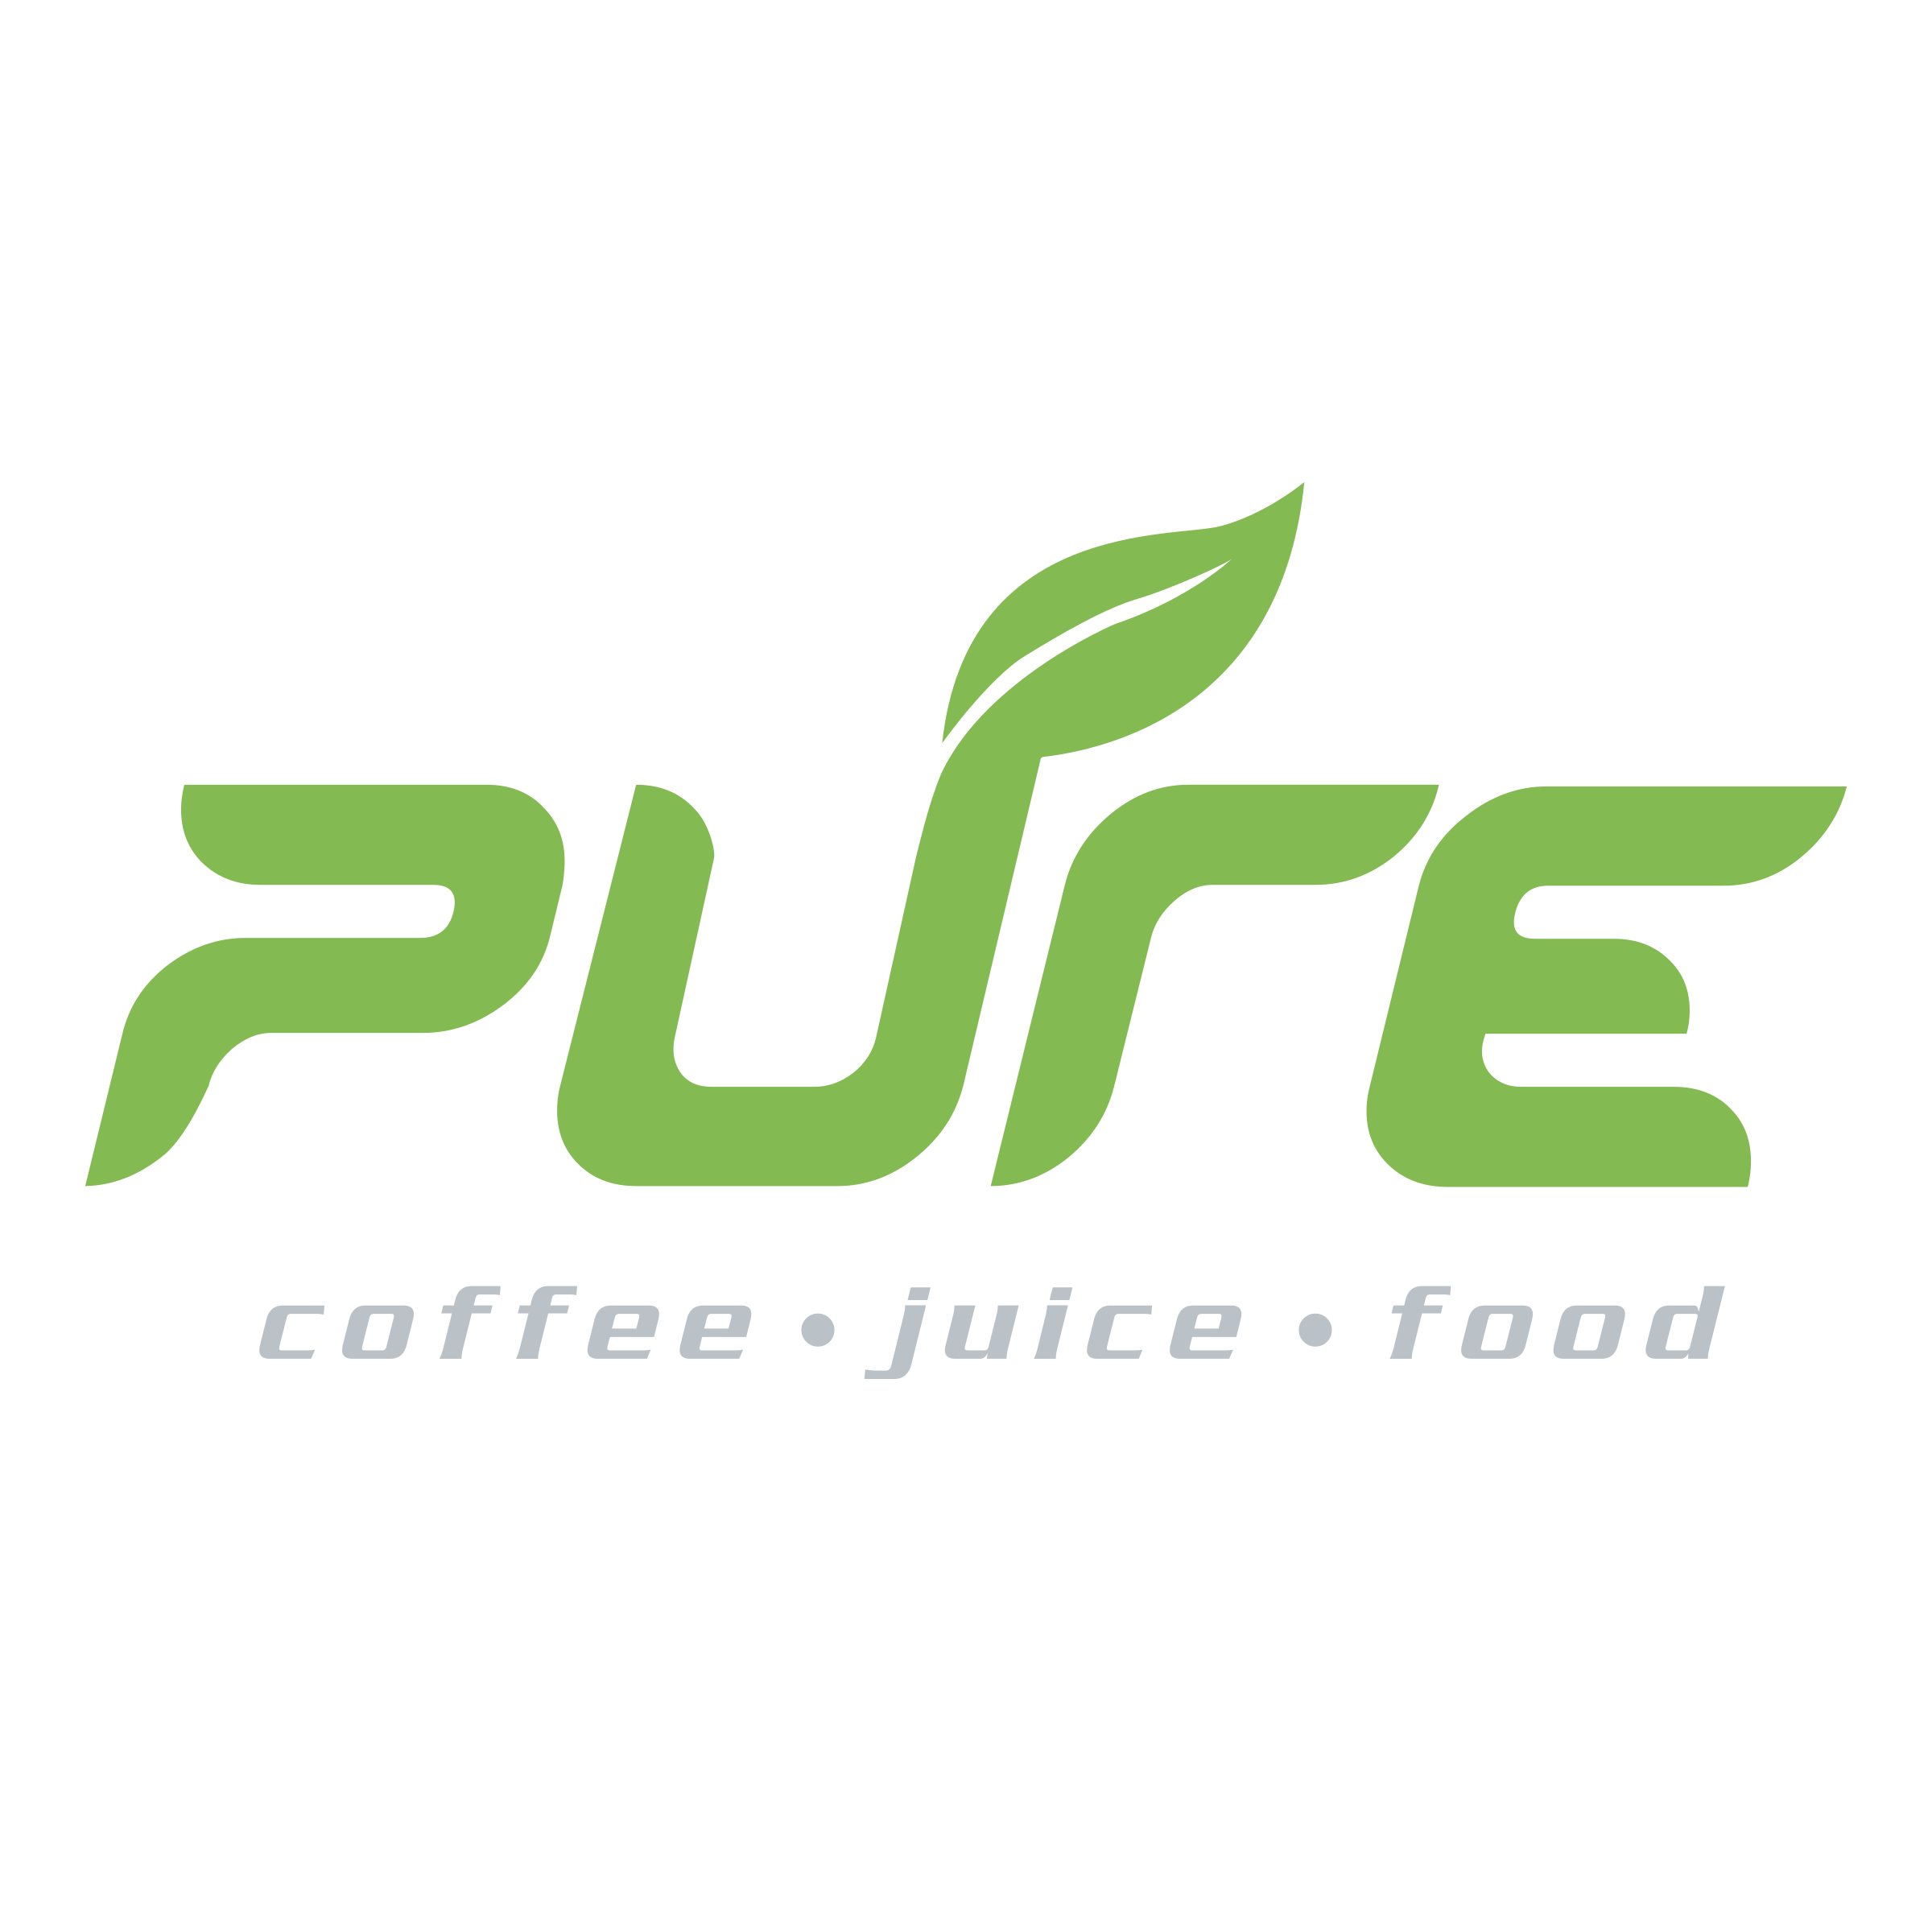 Pure Logo - Pure Logo PNG Transparent & SVG Vector - Freebie Supply